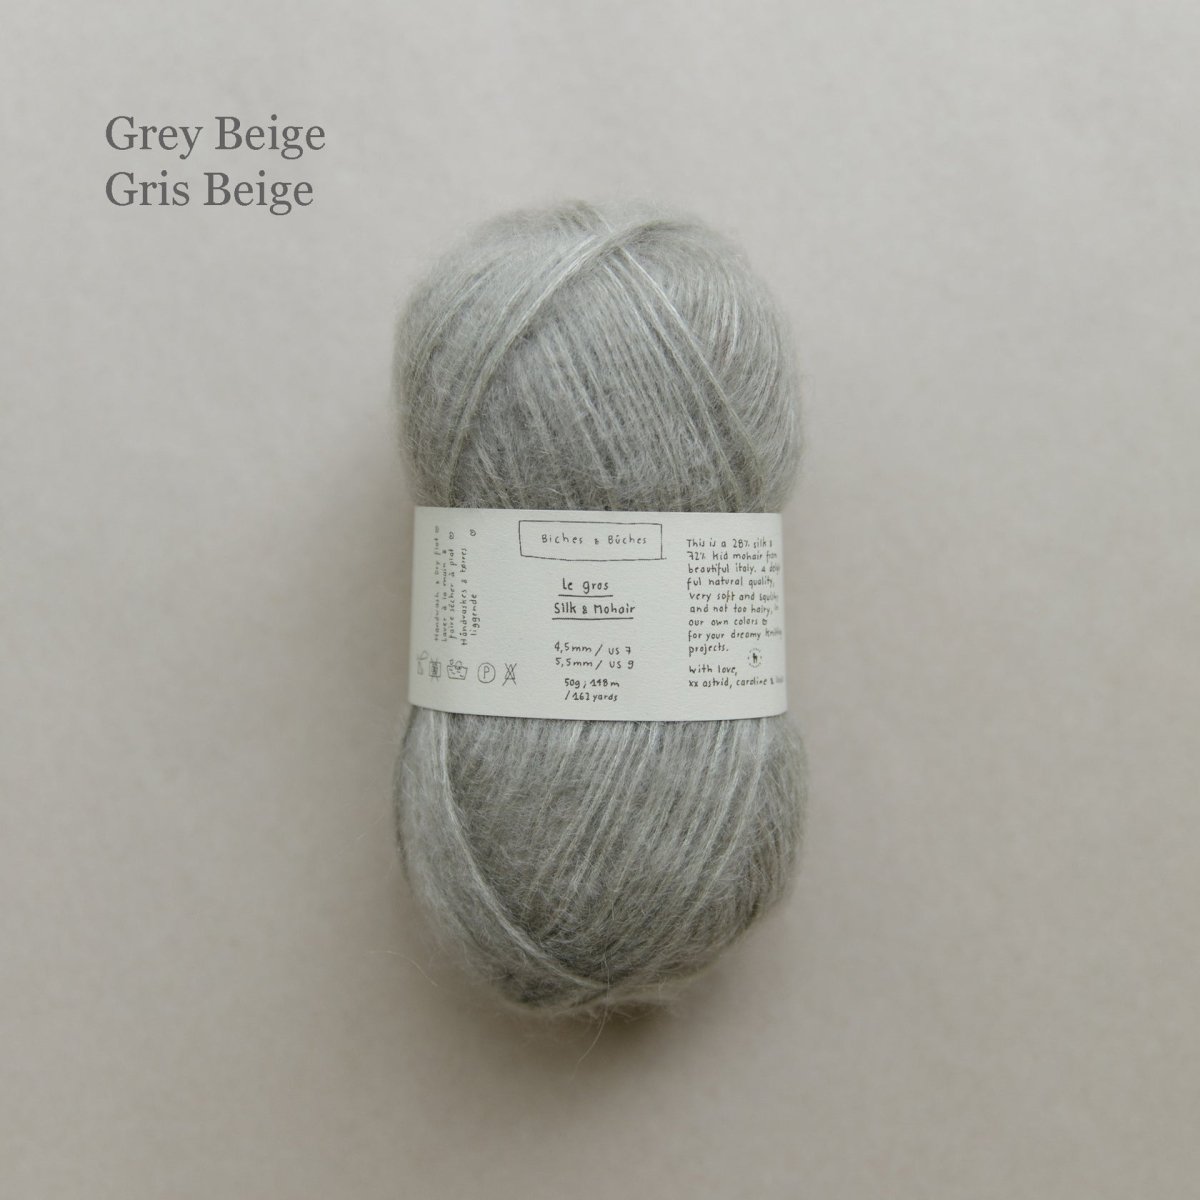 le gros silk & mohair - grey beige at Wabi Sabi